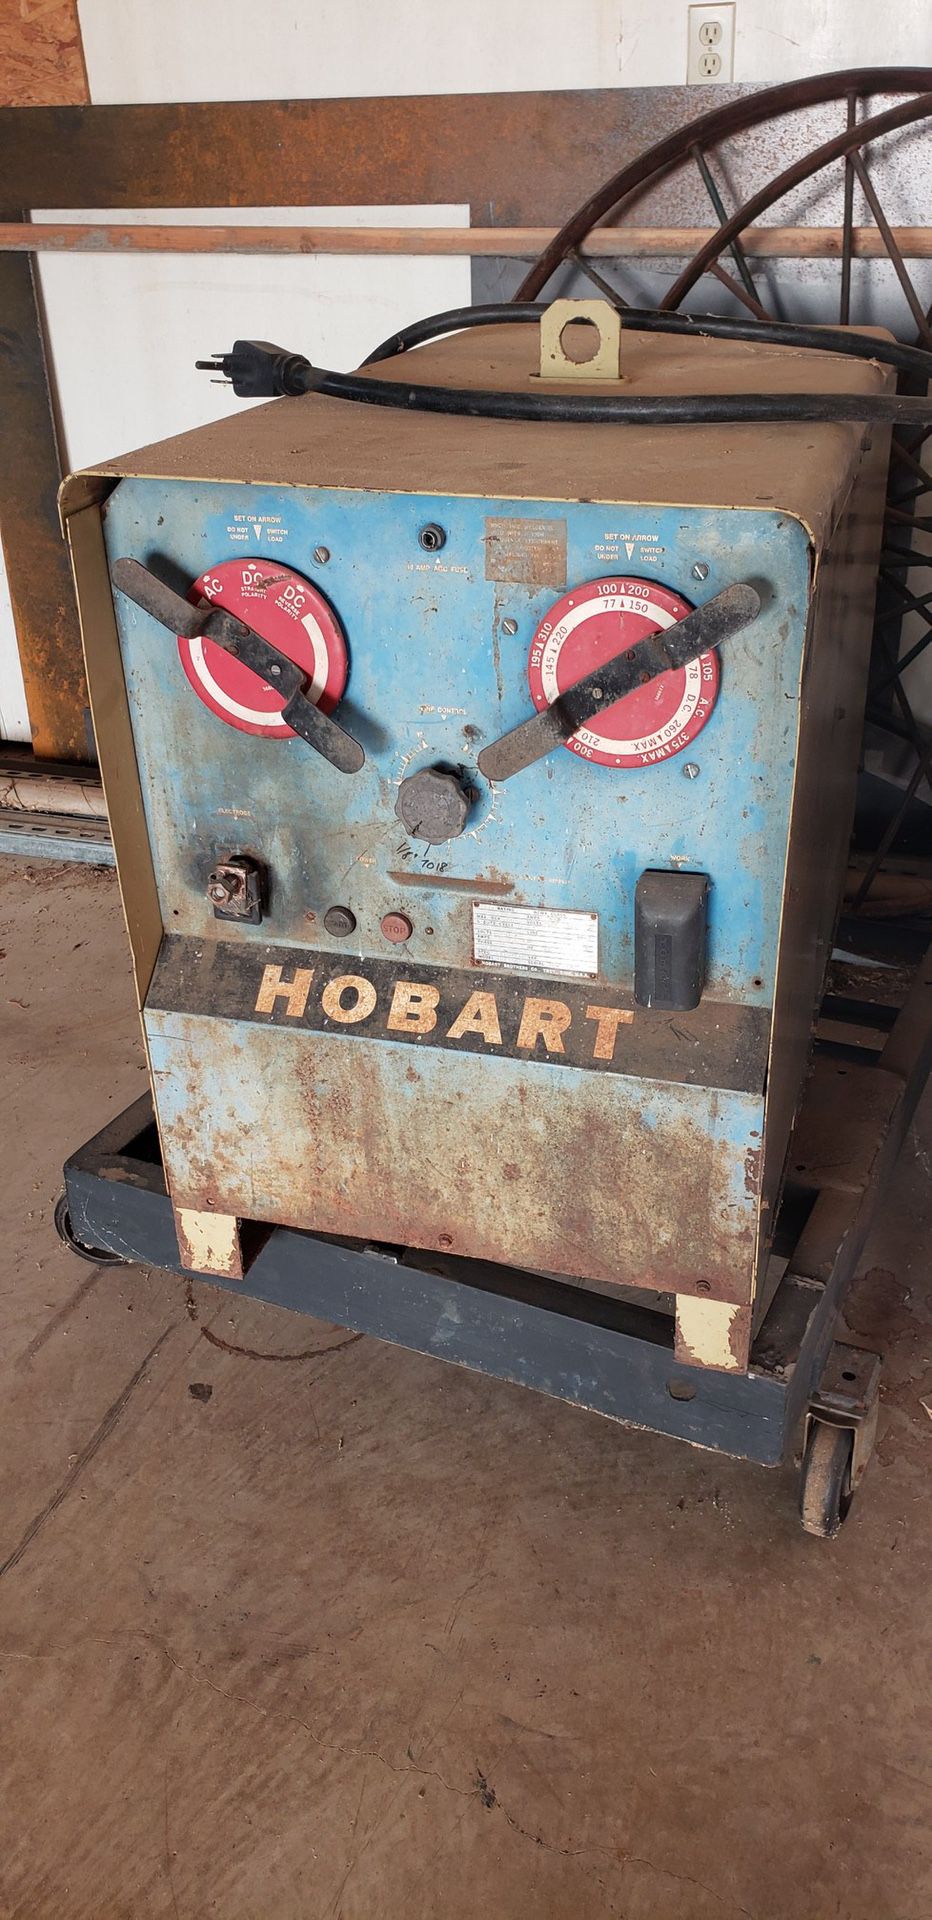 Electric Hobart arc welder